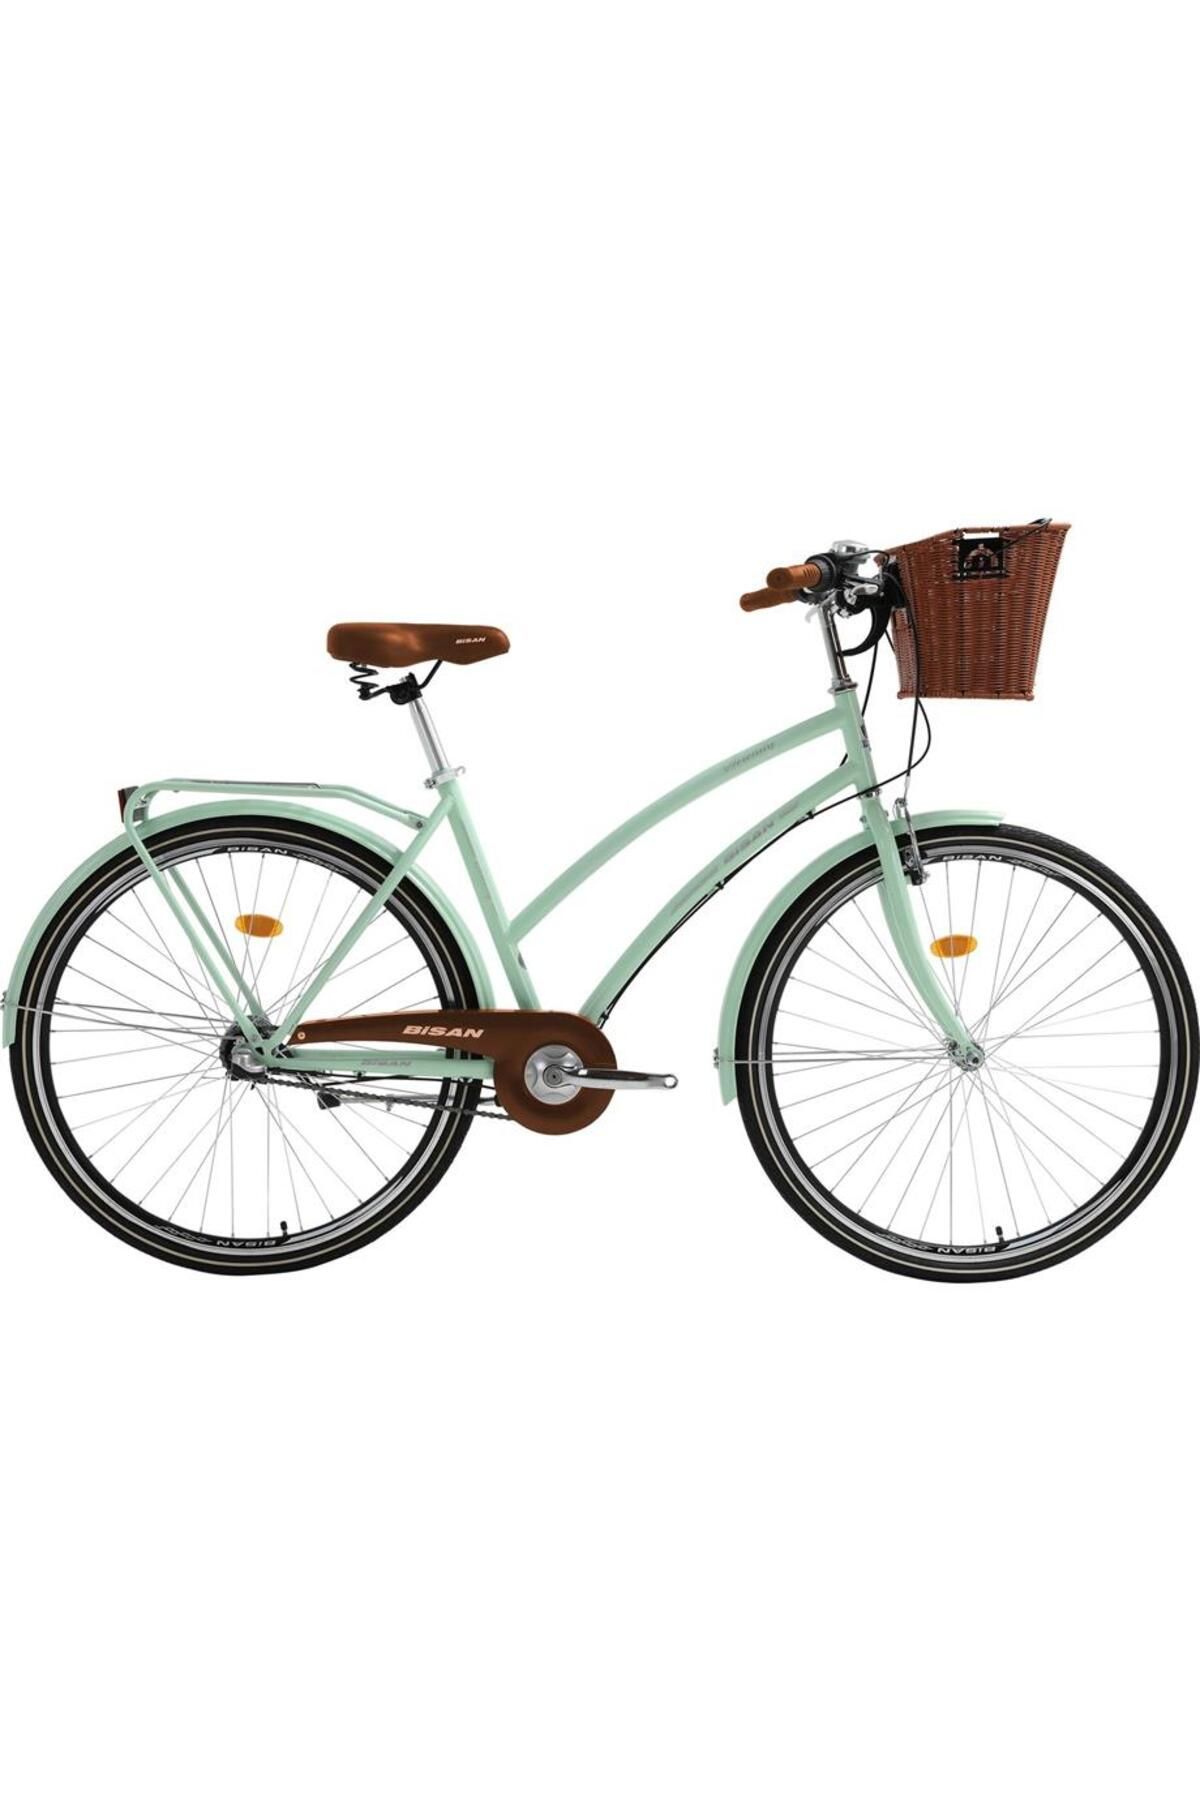 Bisan Serenıty Kadın Şehir Bisikleti 46cm V 28 Jant Nex.3 Vites Mint Yeşil Silver